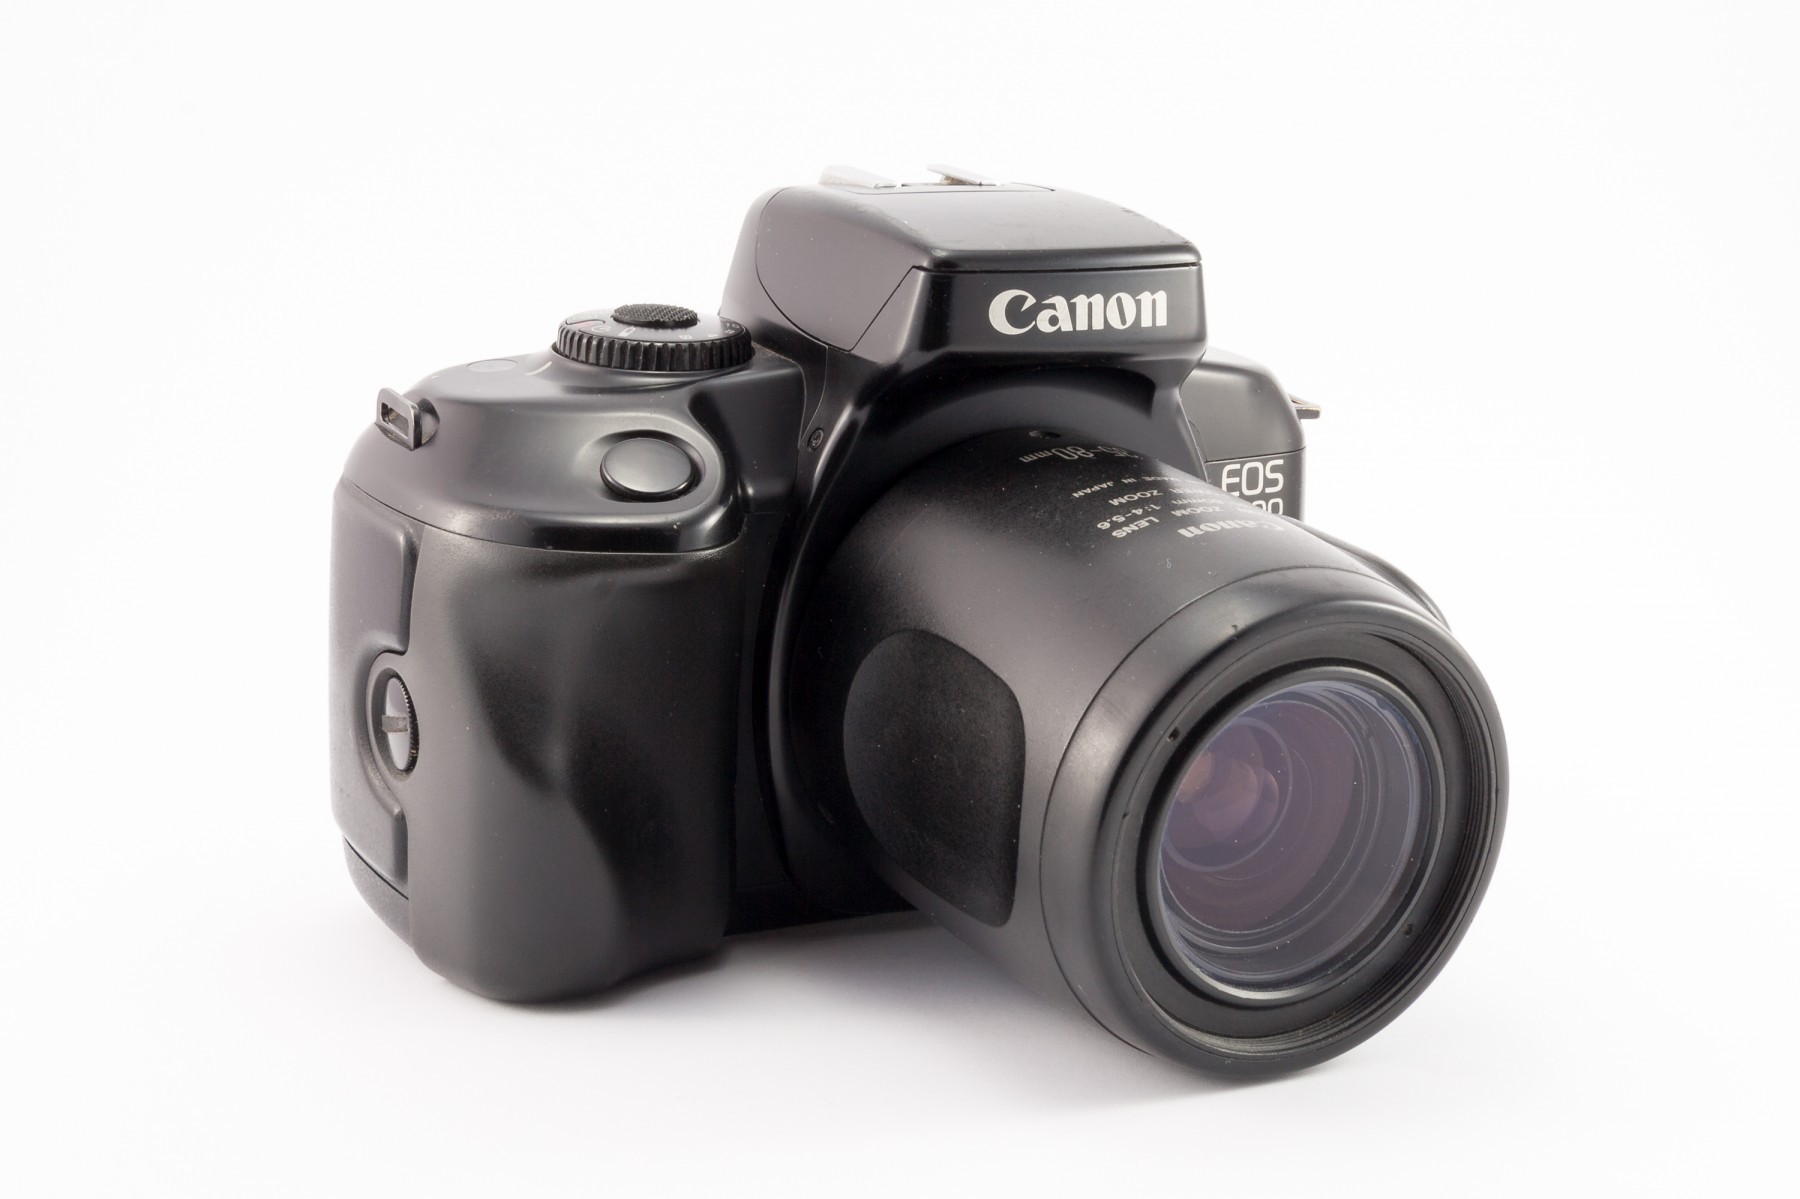  Canon EOS 700  Canon  Lens 35 80mm 1 4 5 6 Kupindo com 